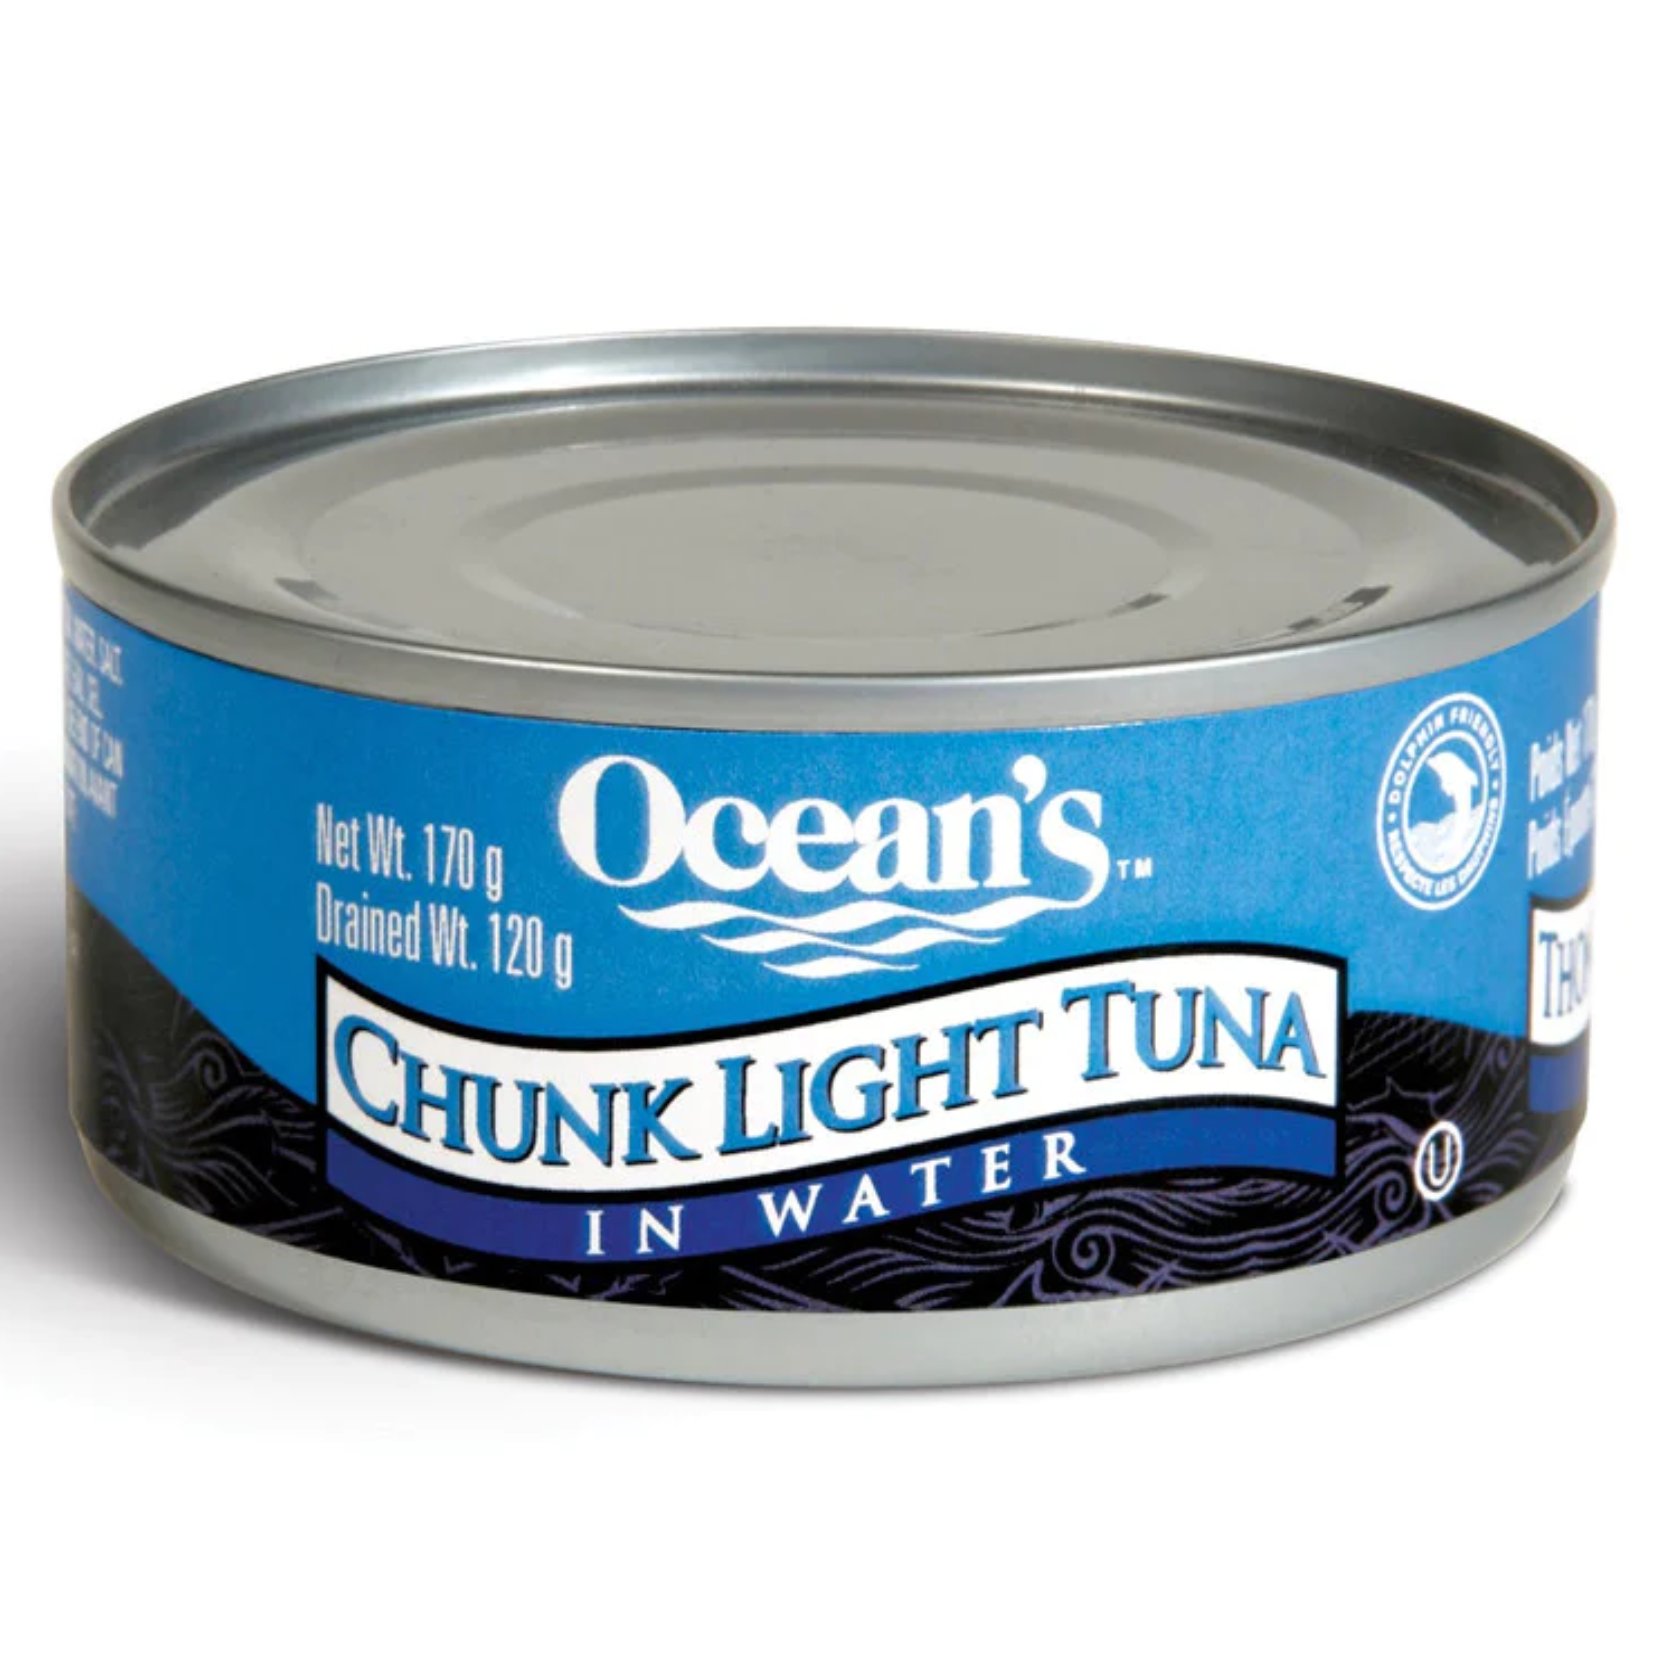 Ocean's Chunk Light Tuna 170g